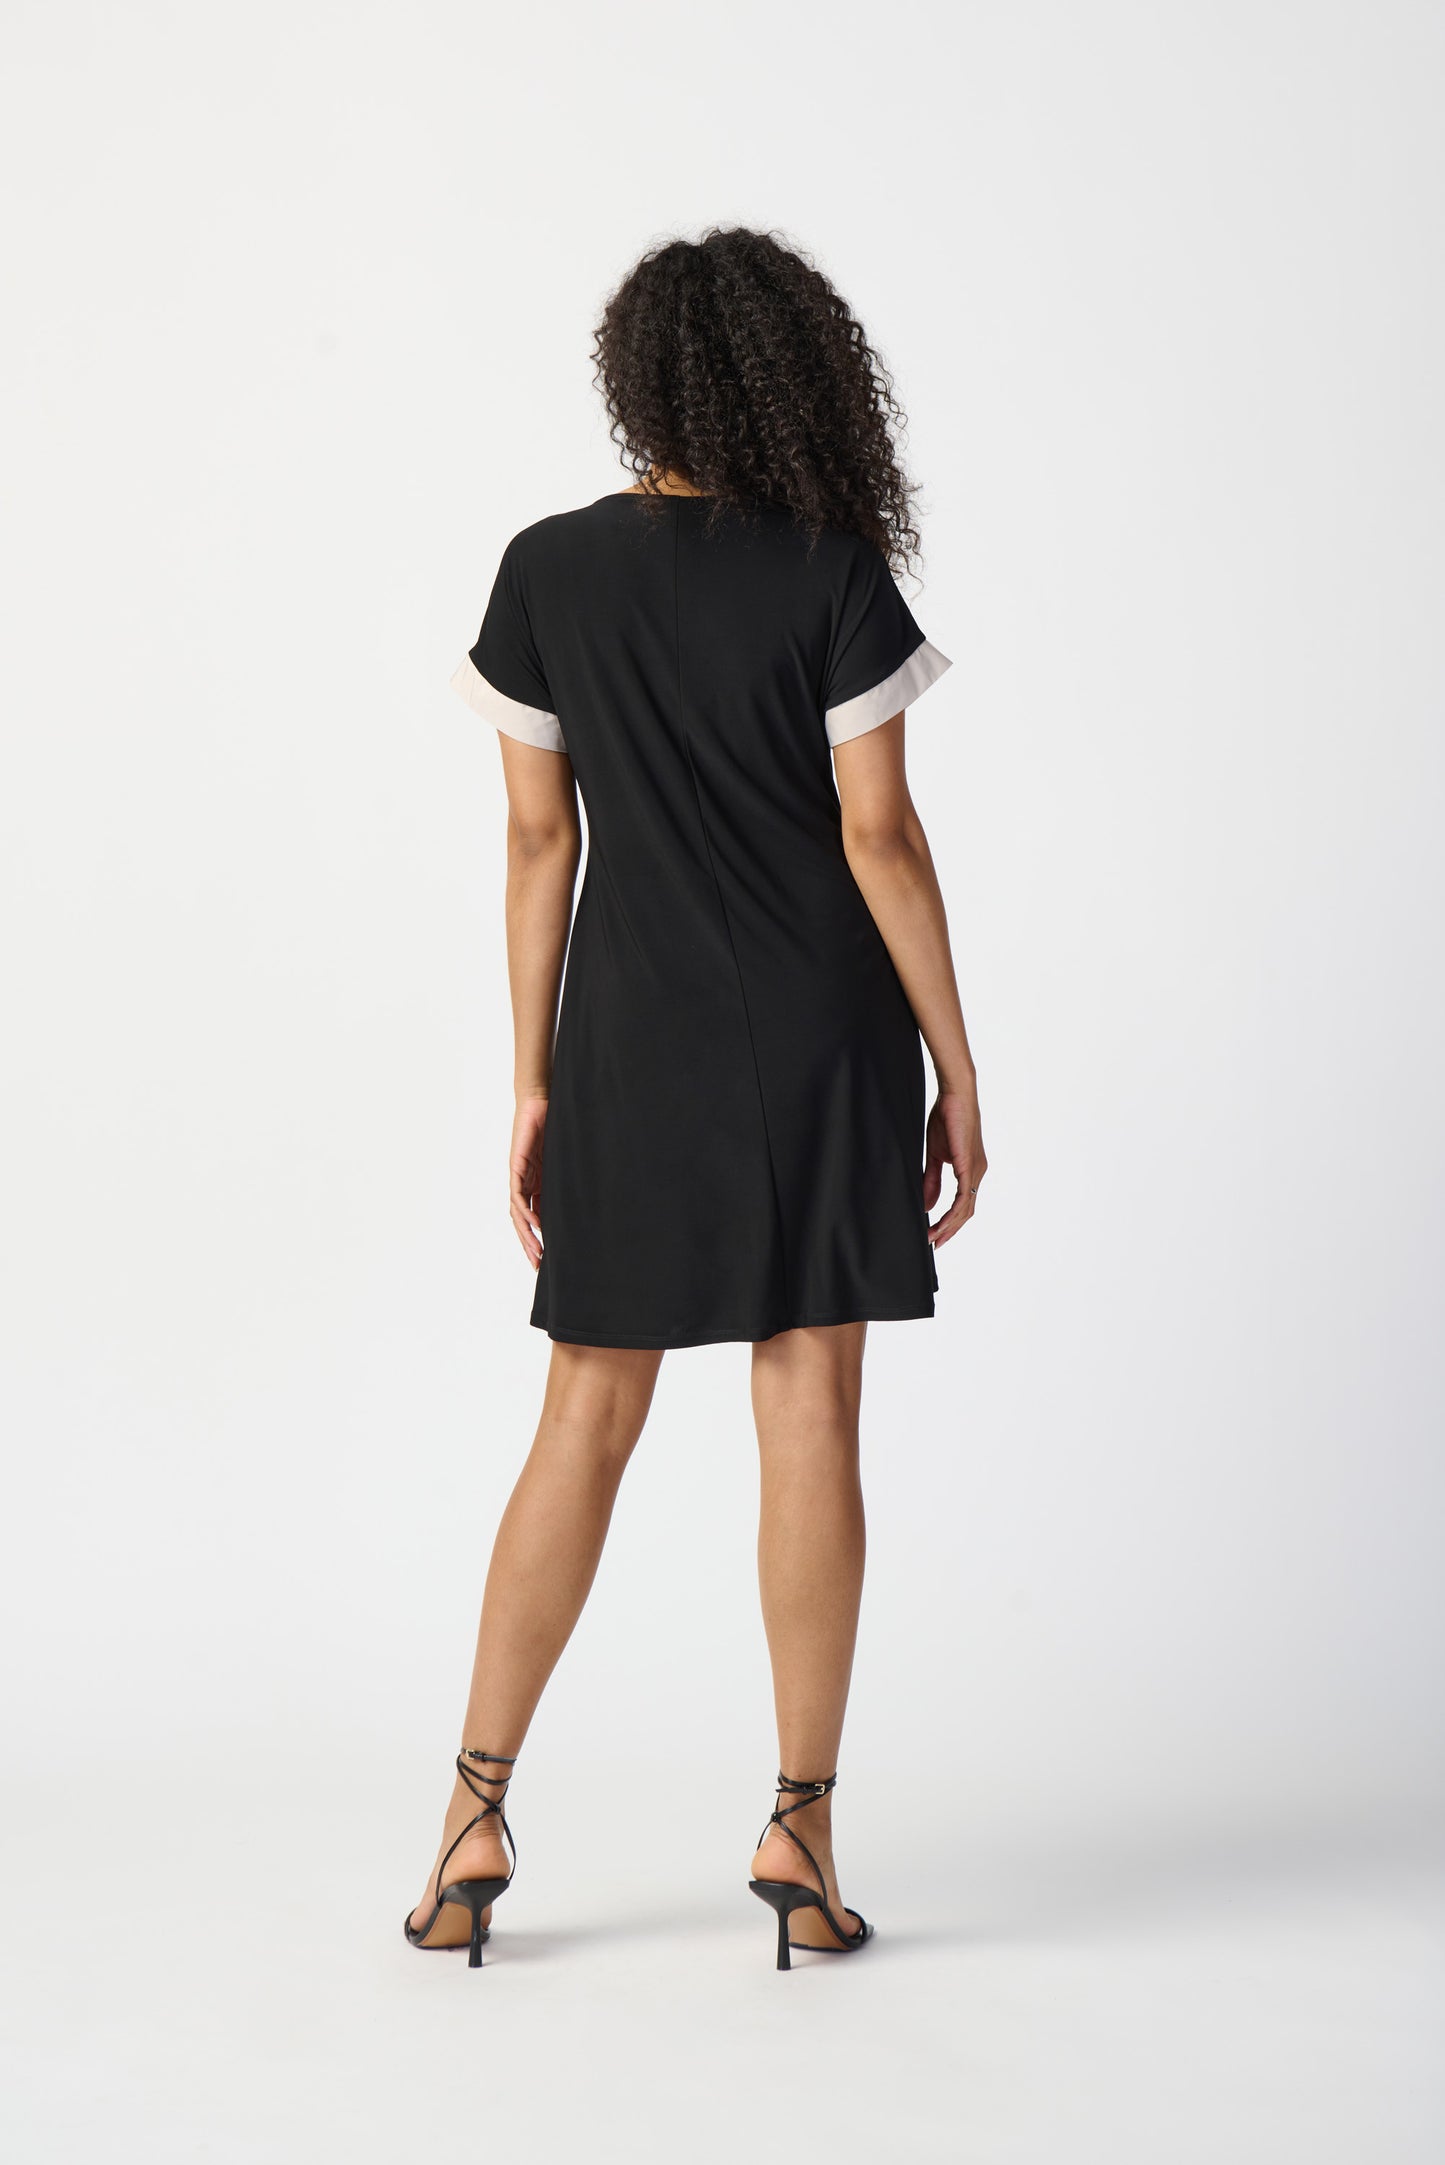 Joseph Ribkoff Colour Block A-line Dress w/Pockets Black/Moonstone 241030